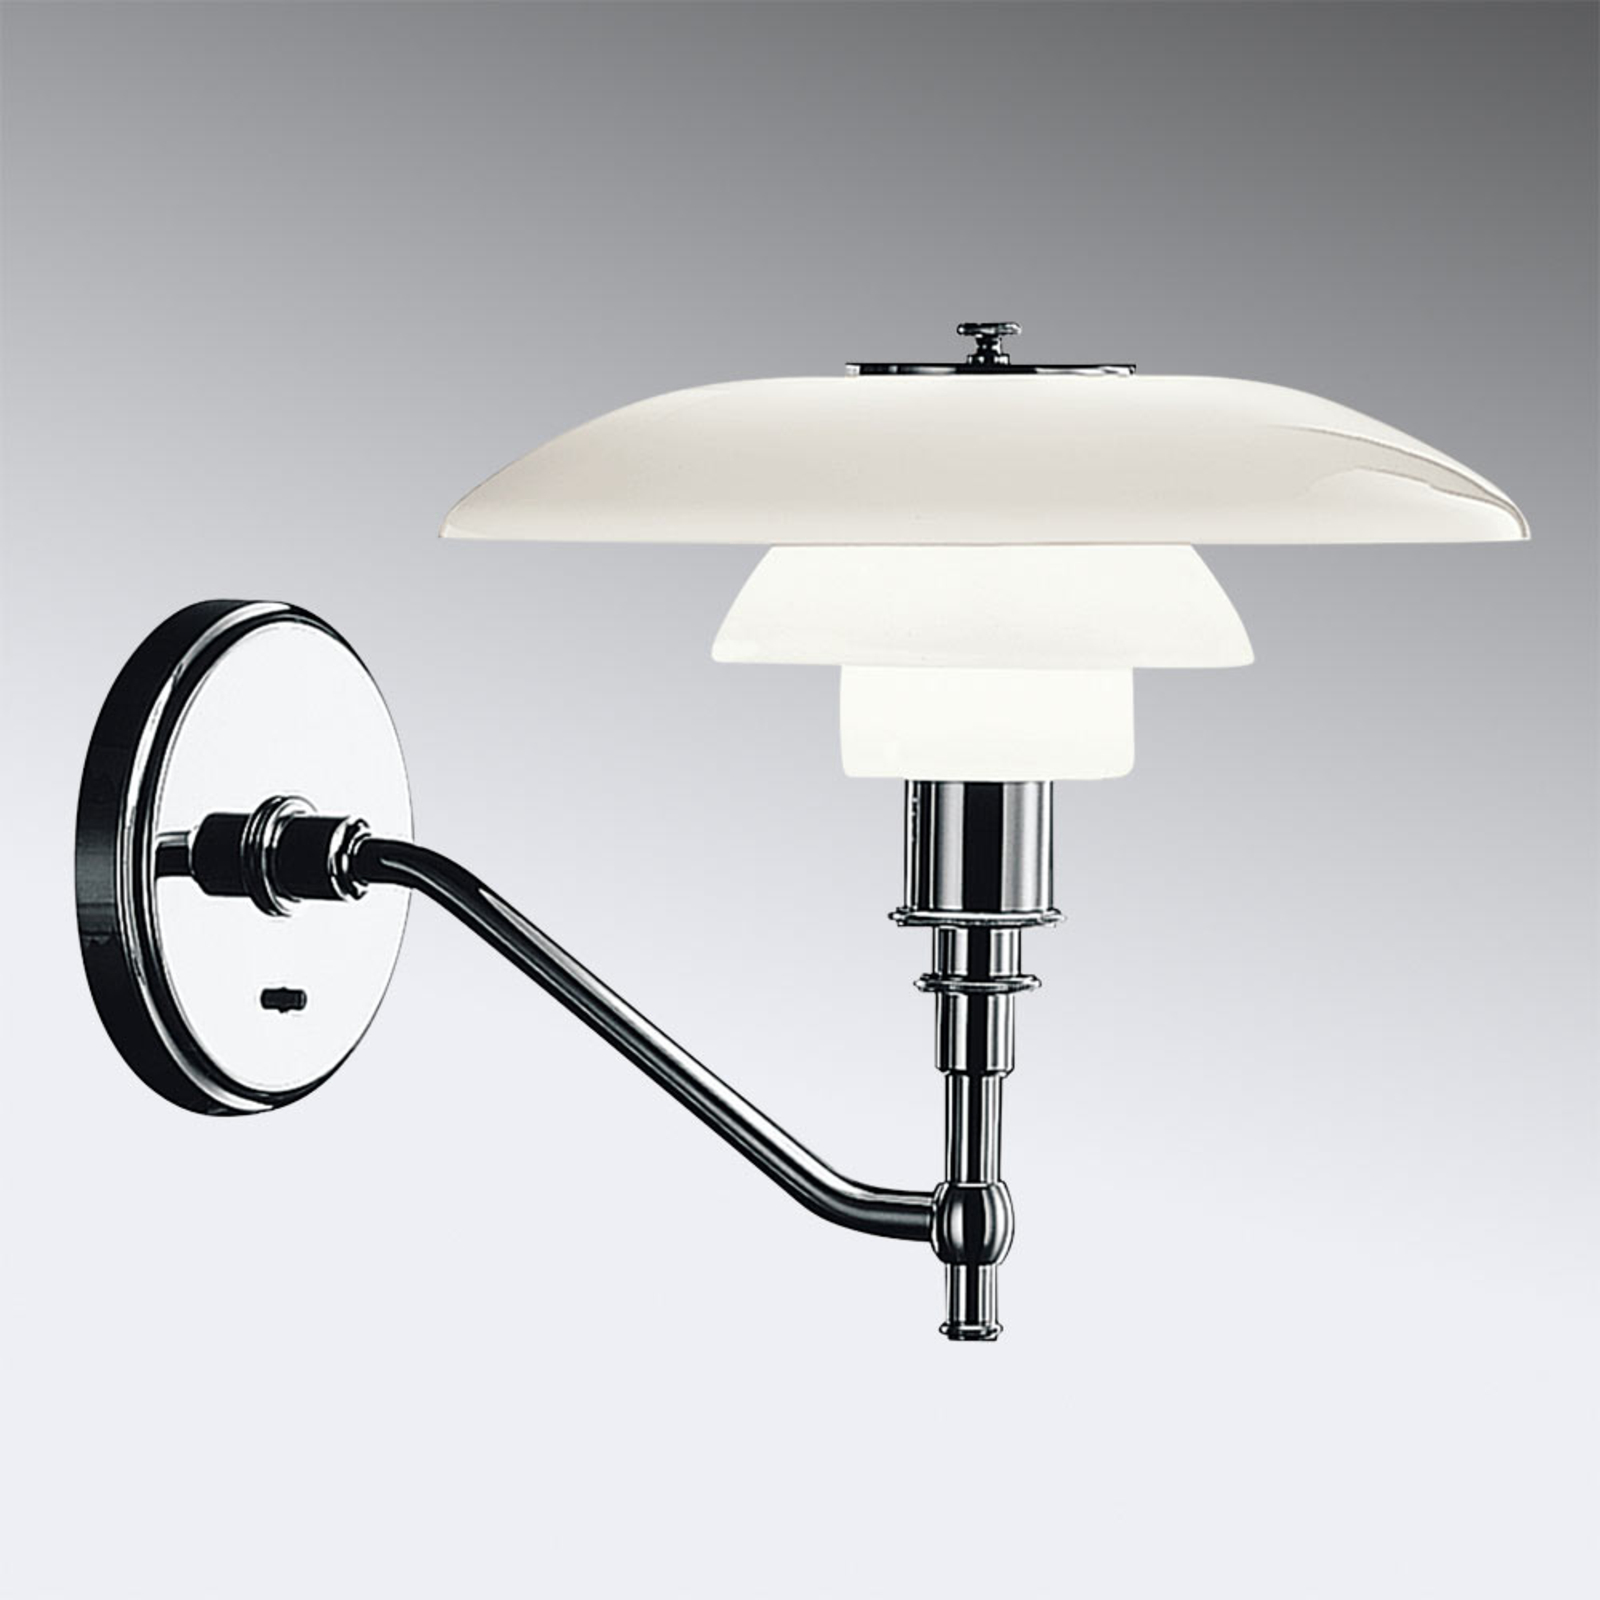 Esthetische design wandlamp PH 3/2